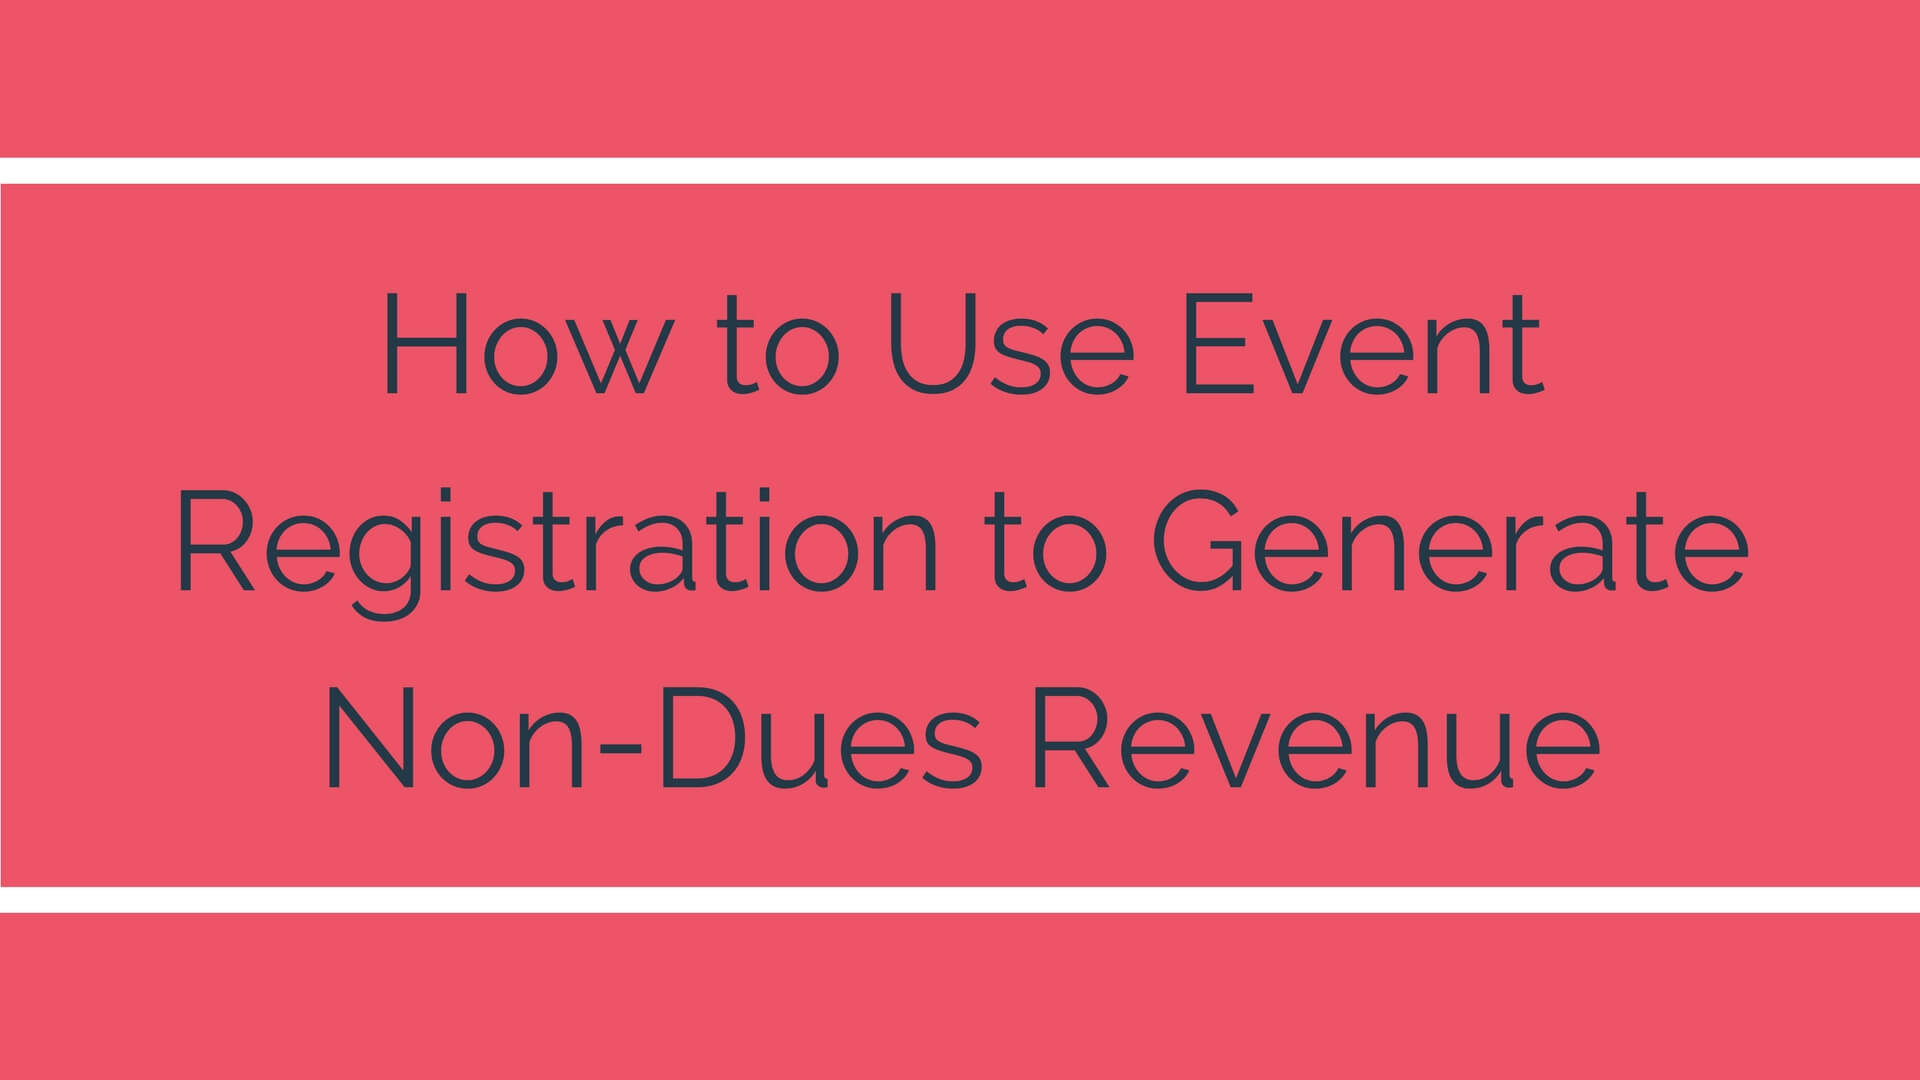 event registration increase non-dues revenue